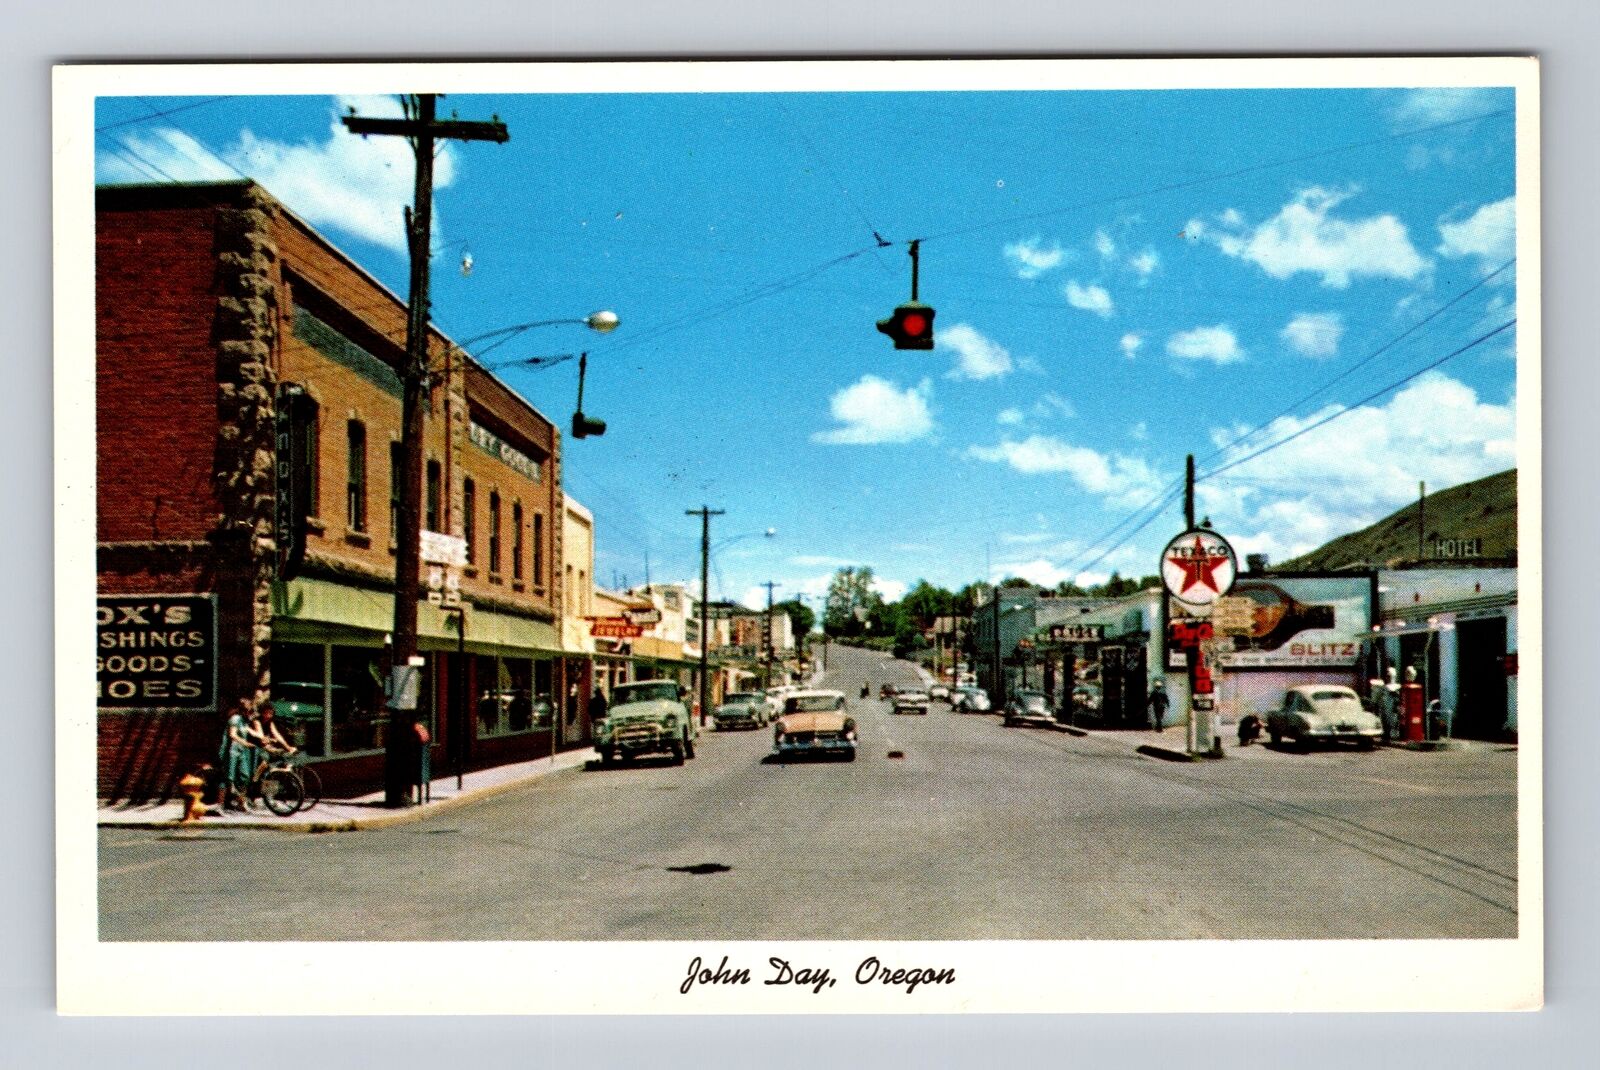 John Day OR-Oregon, City Area Street, Antique, Vintage Postcard